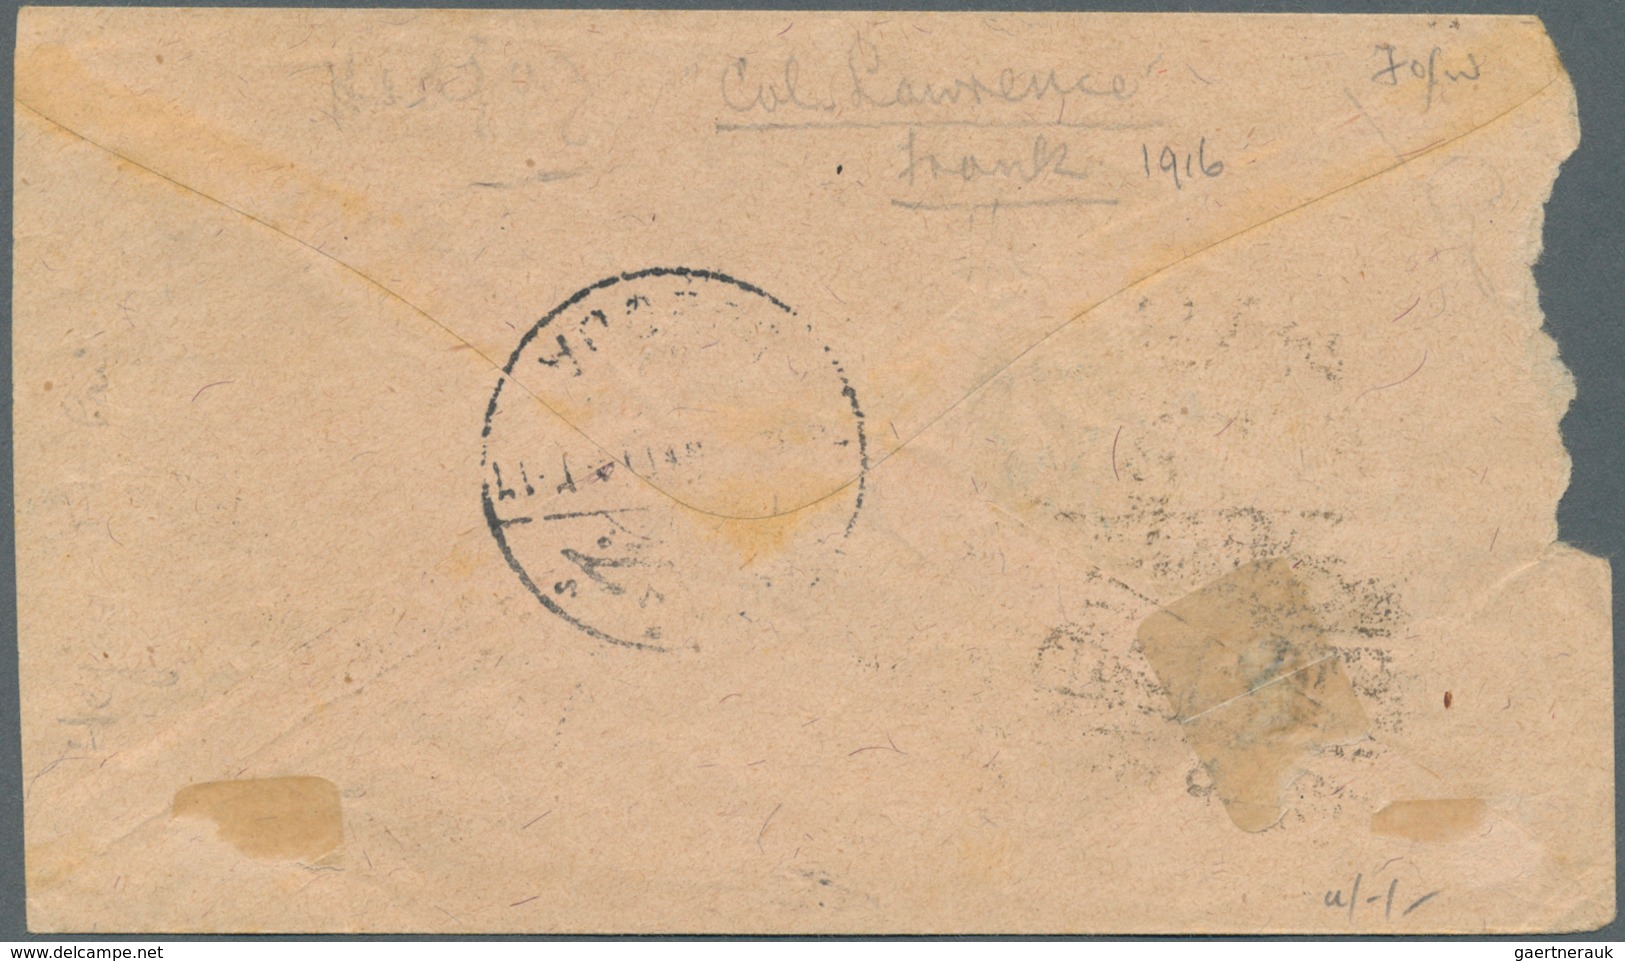 Saudi-Arabien - Stempel: 1916, Stampless Cover Tied By "MEKKE I MUKEREME - 2/12/16" Ds. (Uexkull Typ - Saudi-Arabien